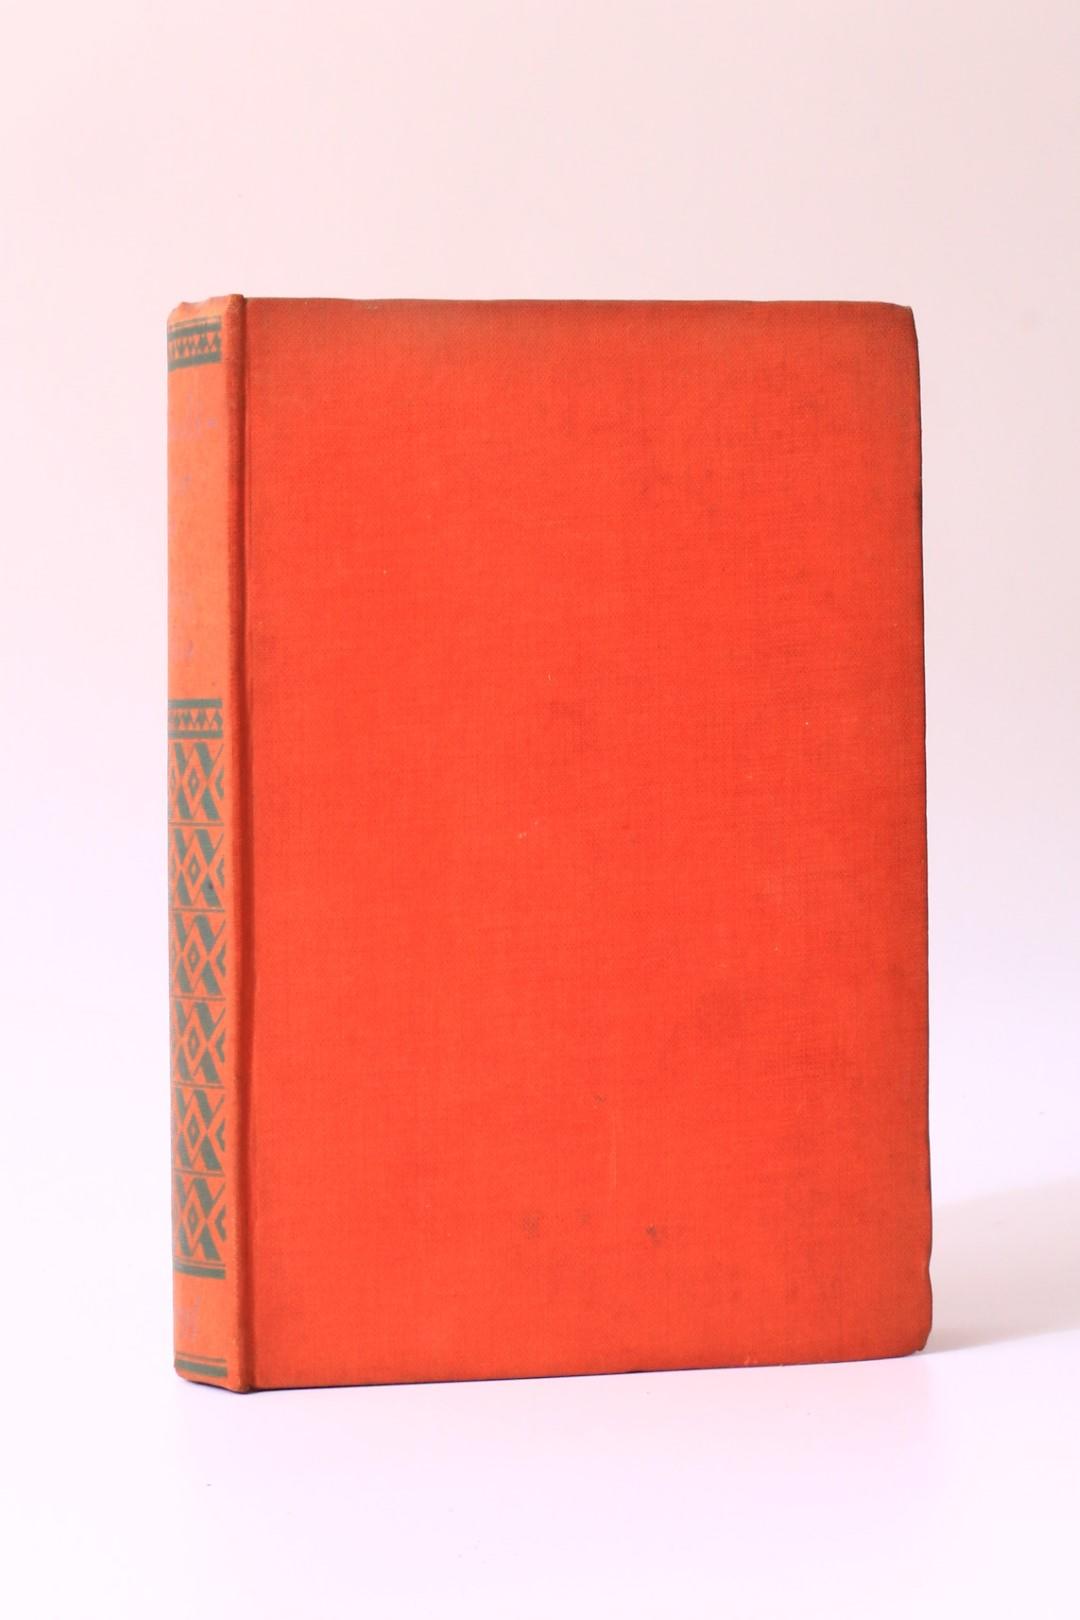 Philip Wylie - Gladiator - Knopf, 1930, First Edition.